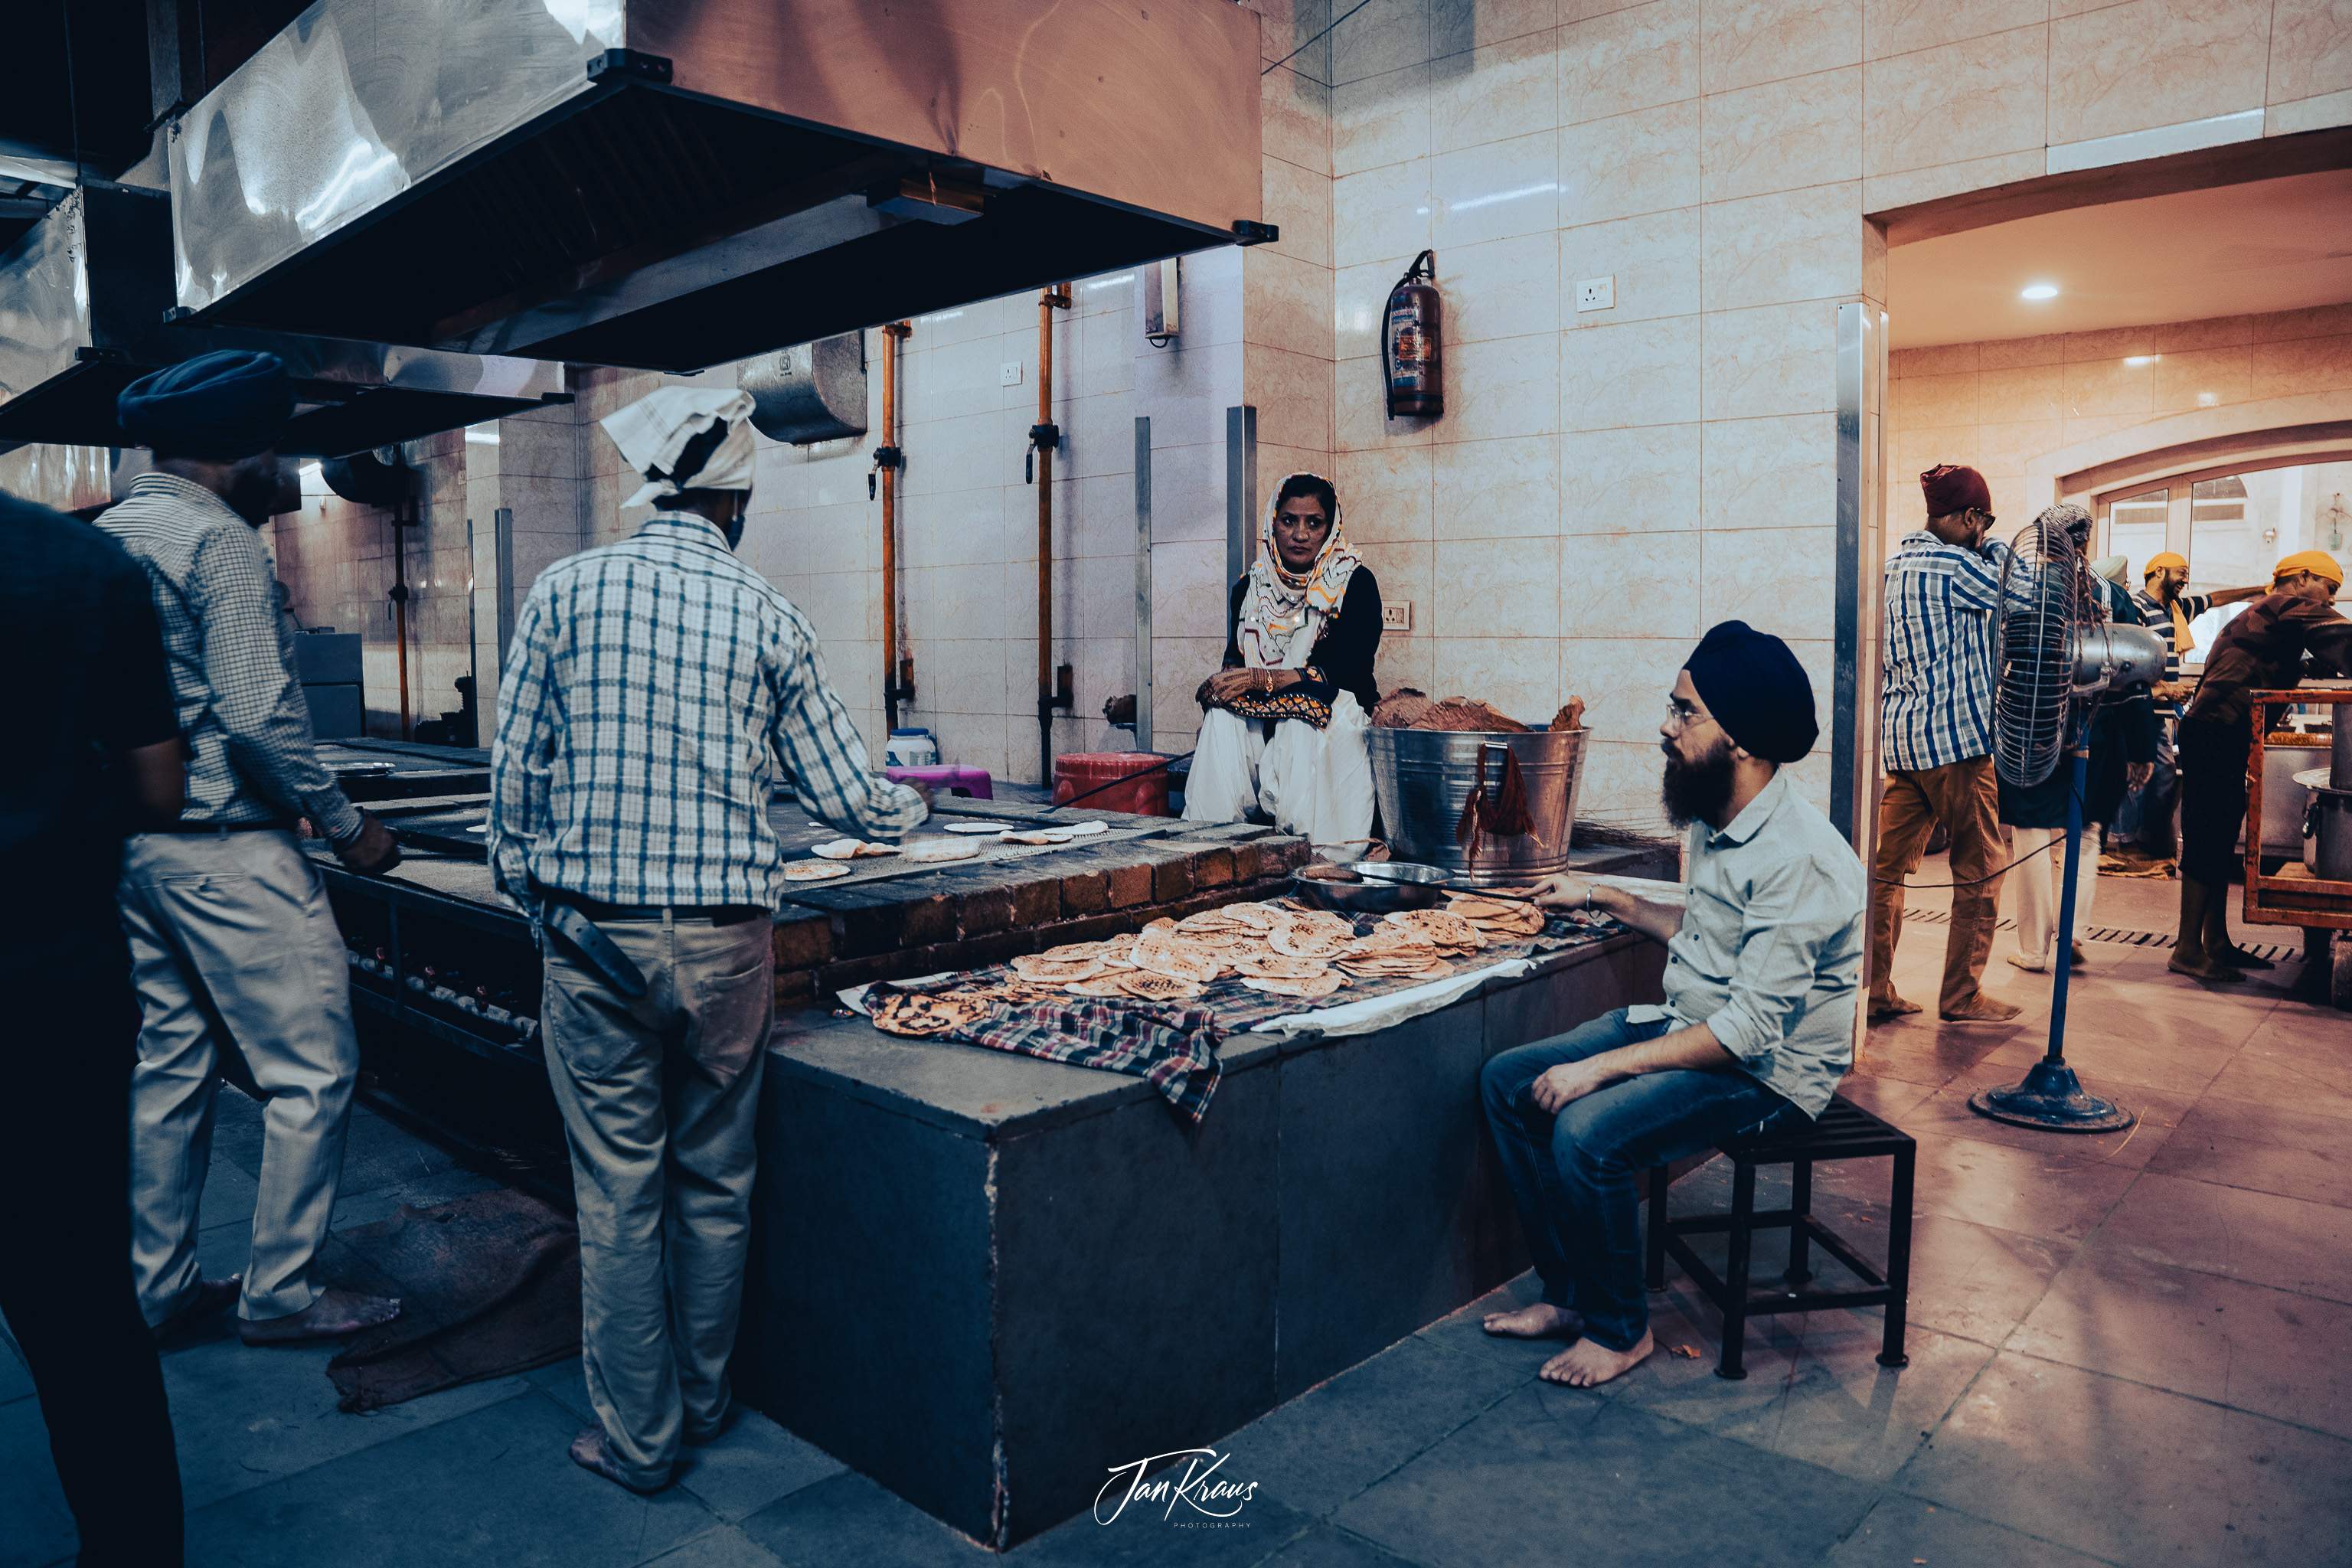 A view of community kitchen (Langar) at Gurudwara Shri Bangla Sahib, New Delhi, India